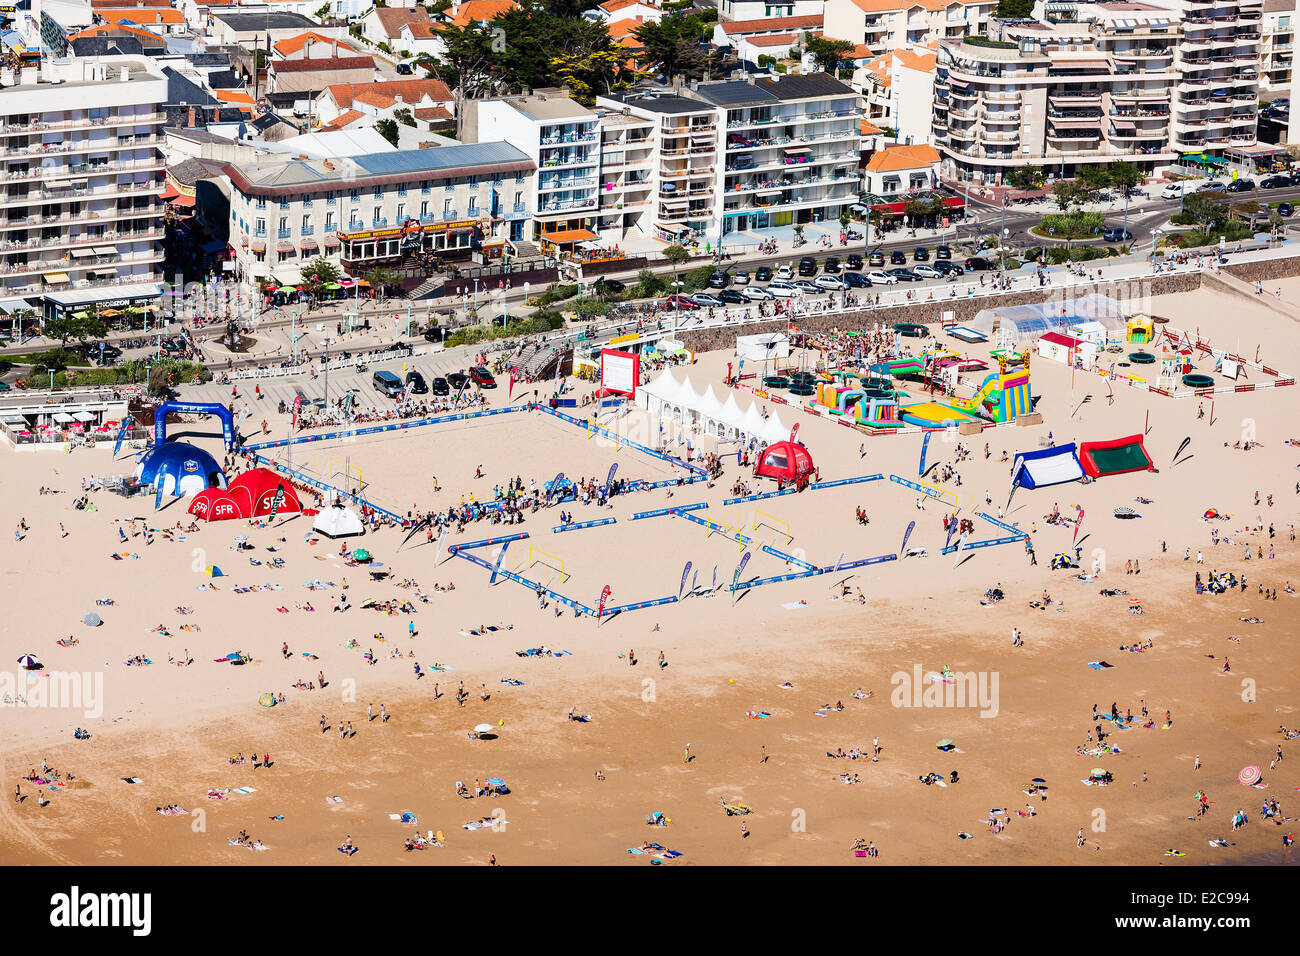 France, Vendee, Saint Jean de Monts, beach soccer tournament (aerial view  Stock Photo - Alamy